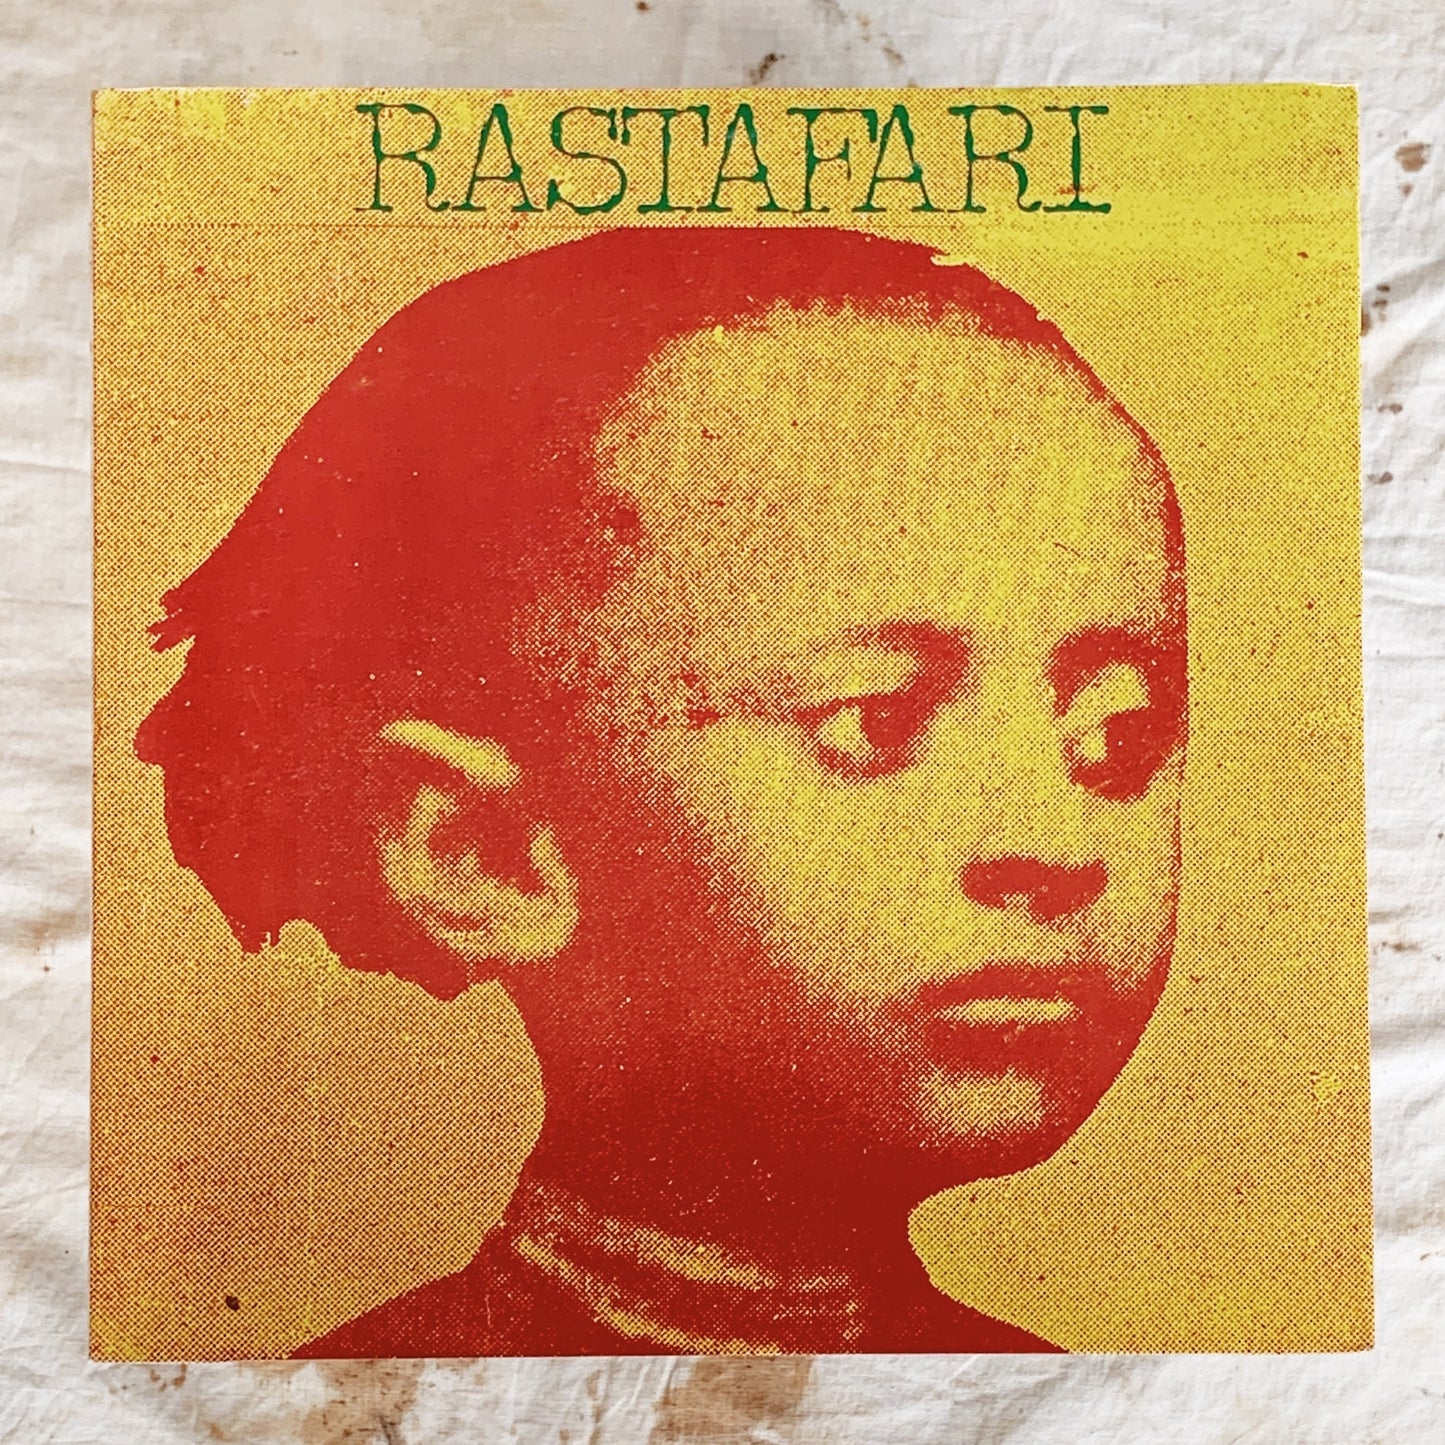 Ras Michael & The Sons Of Negus / Rastafari LP